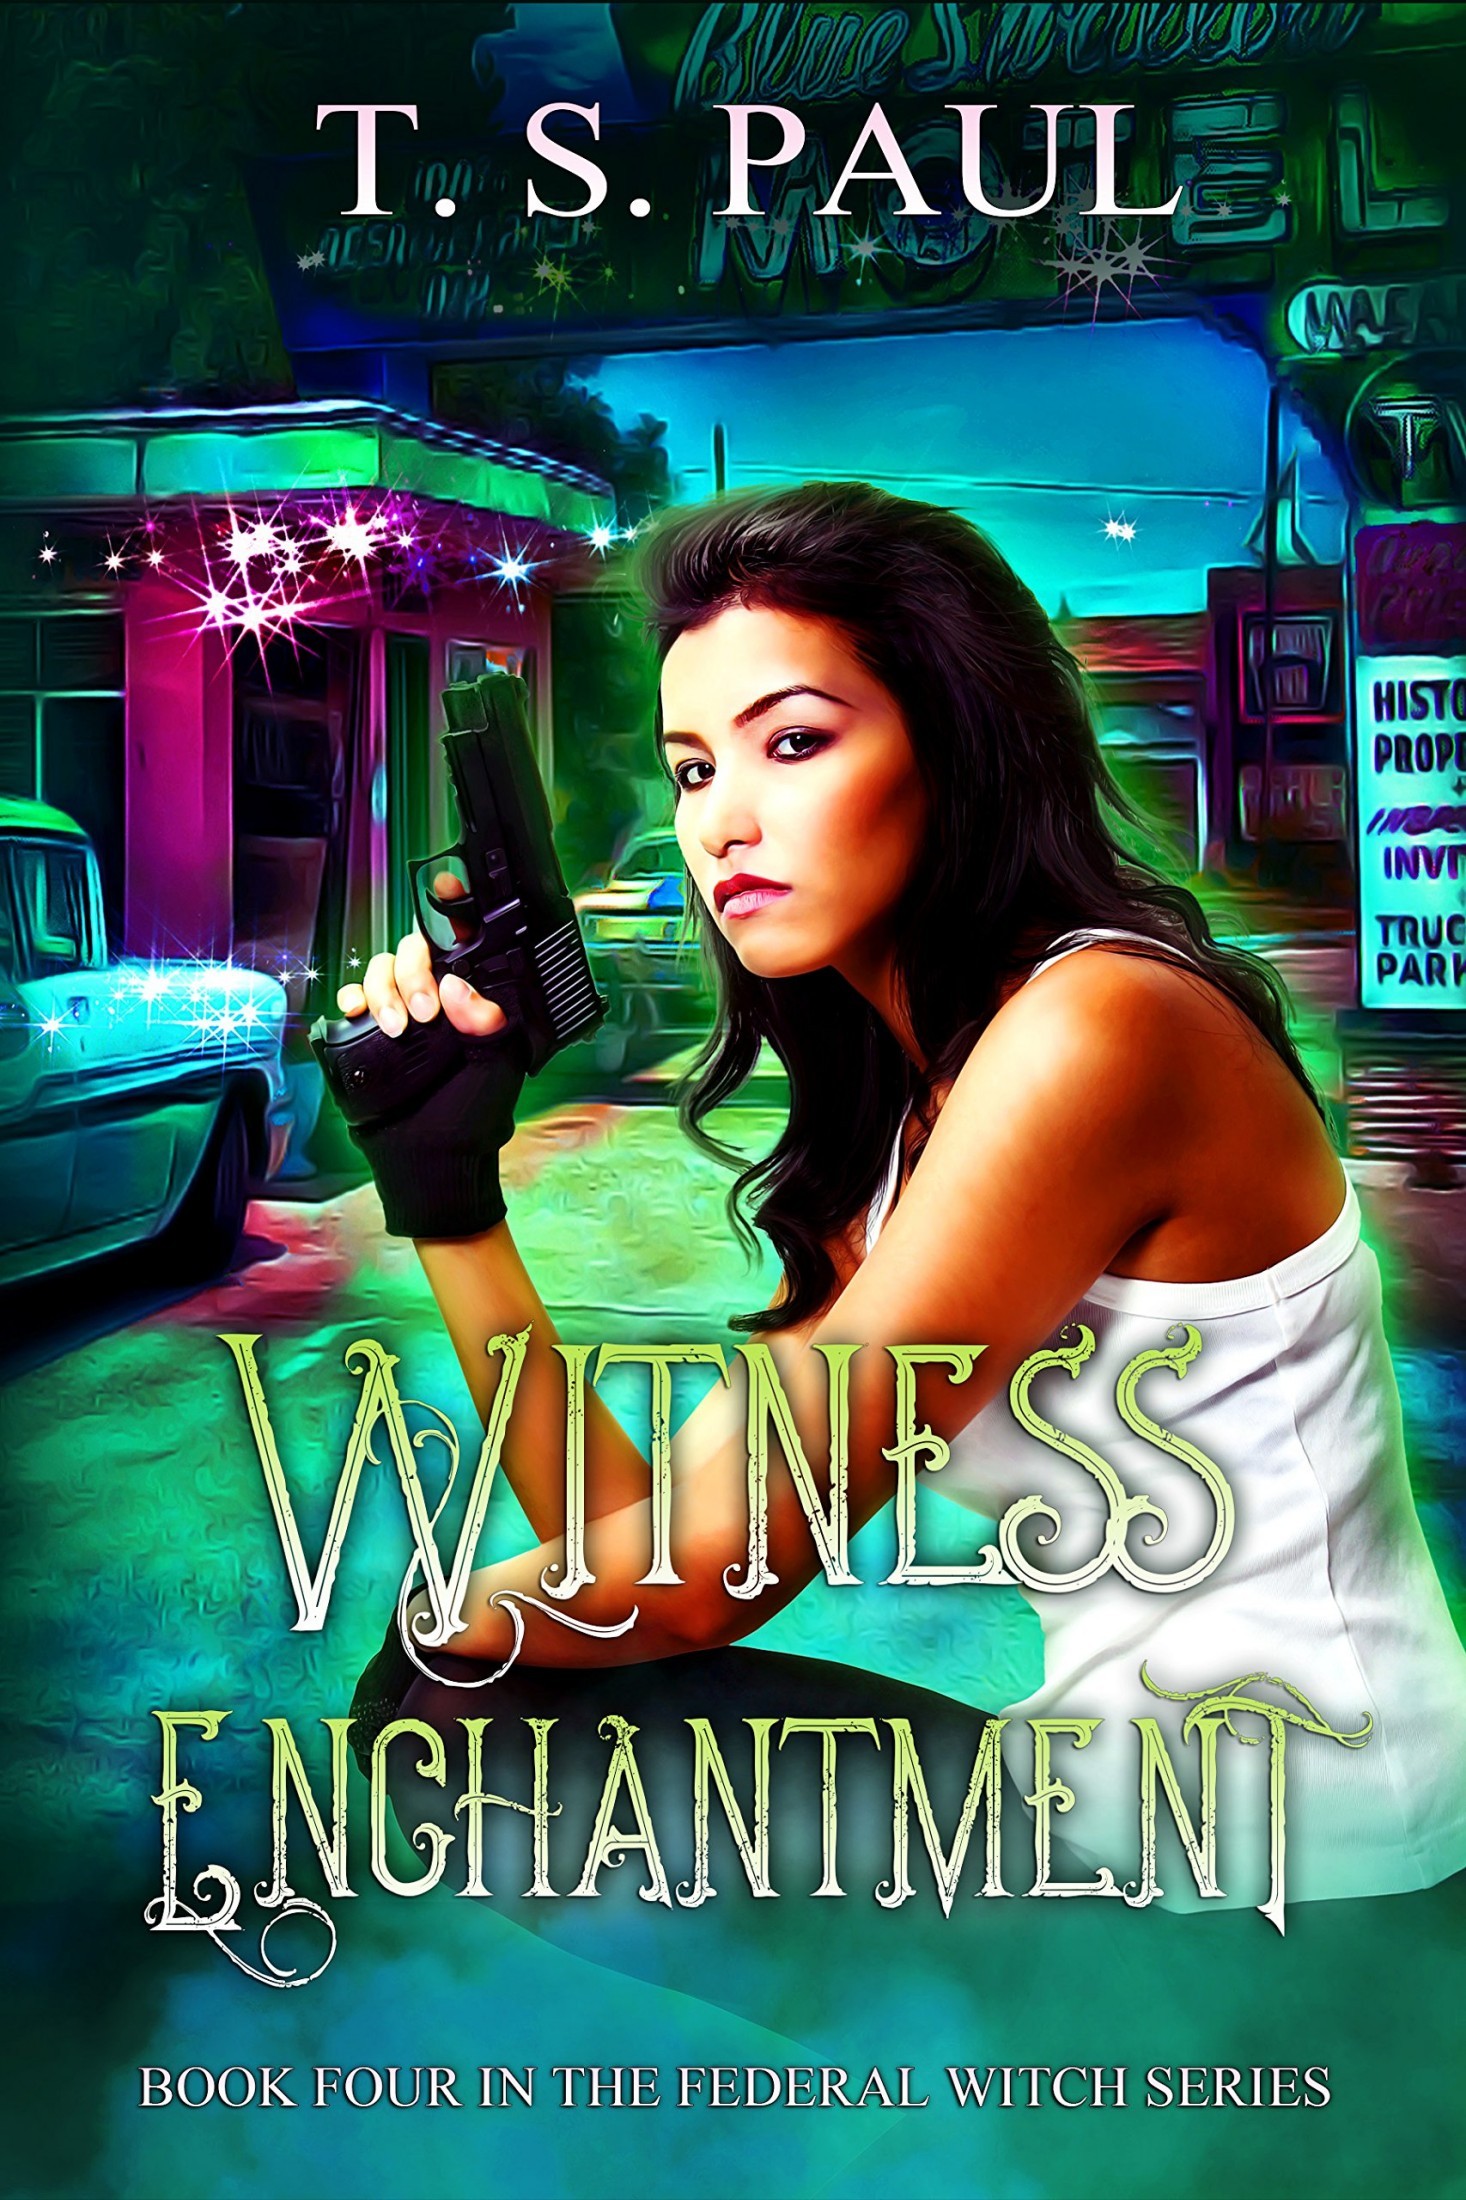 Witness Enchantment